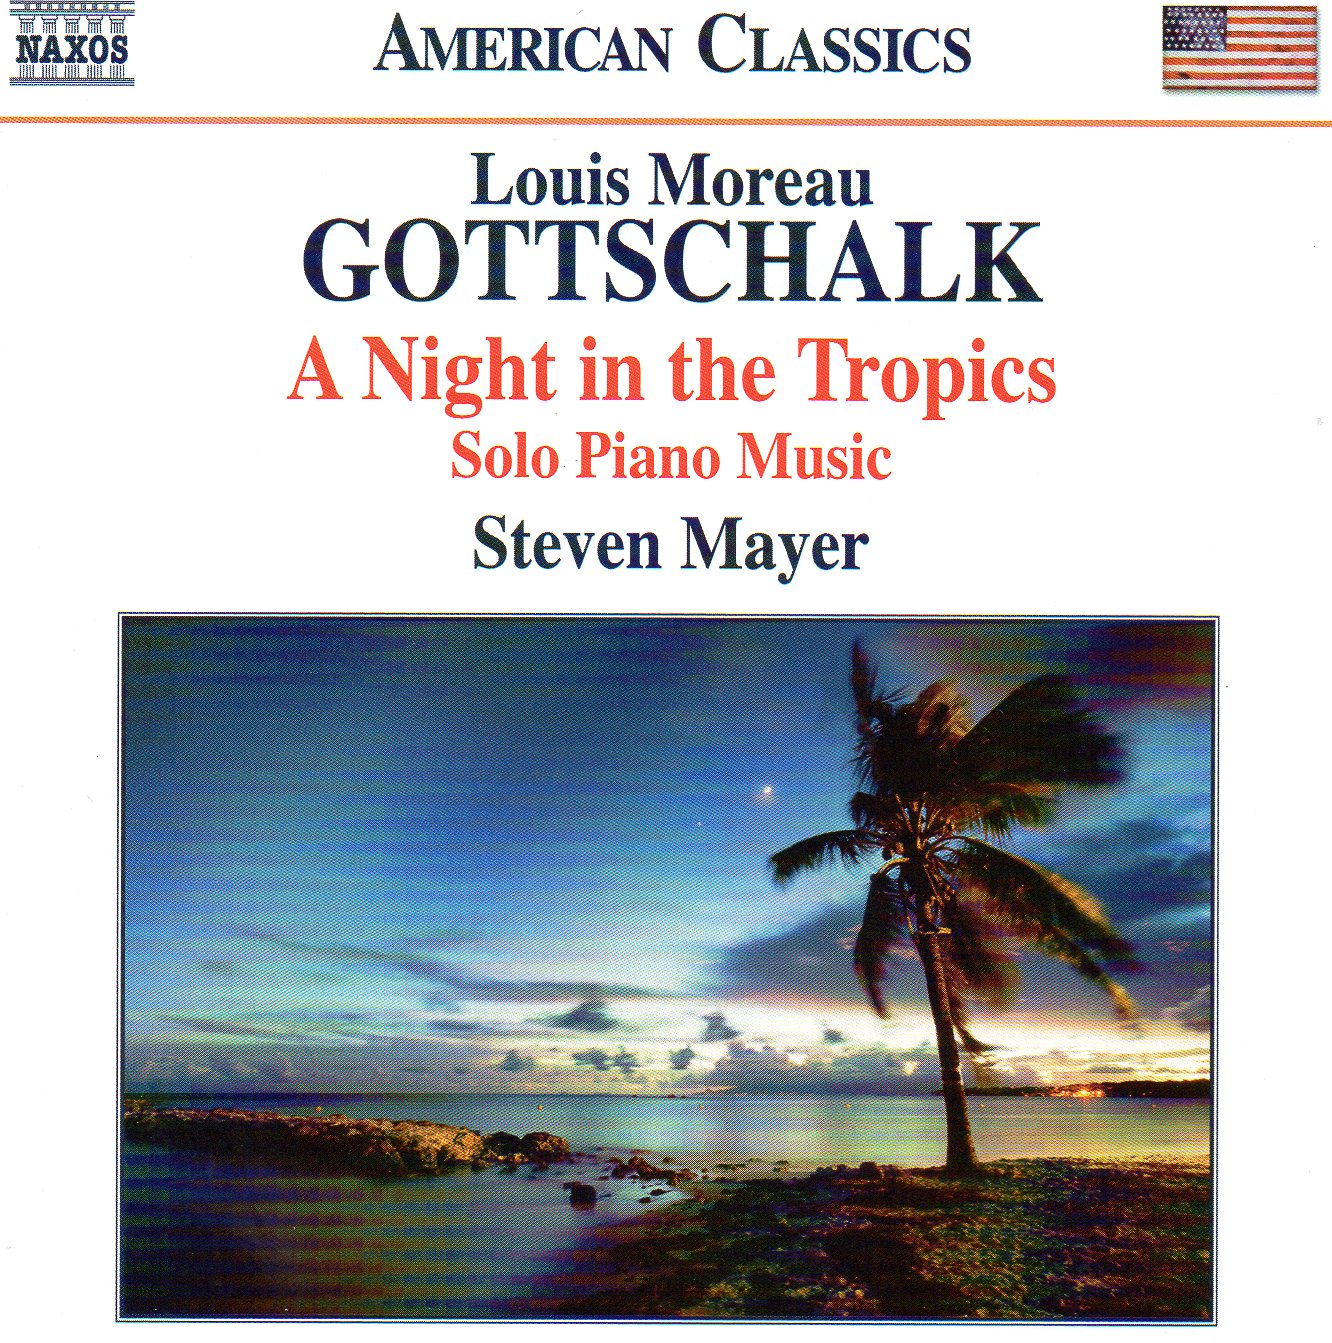 Gottschalk: obra per a piano